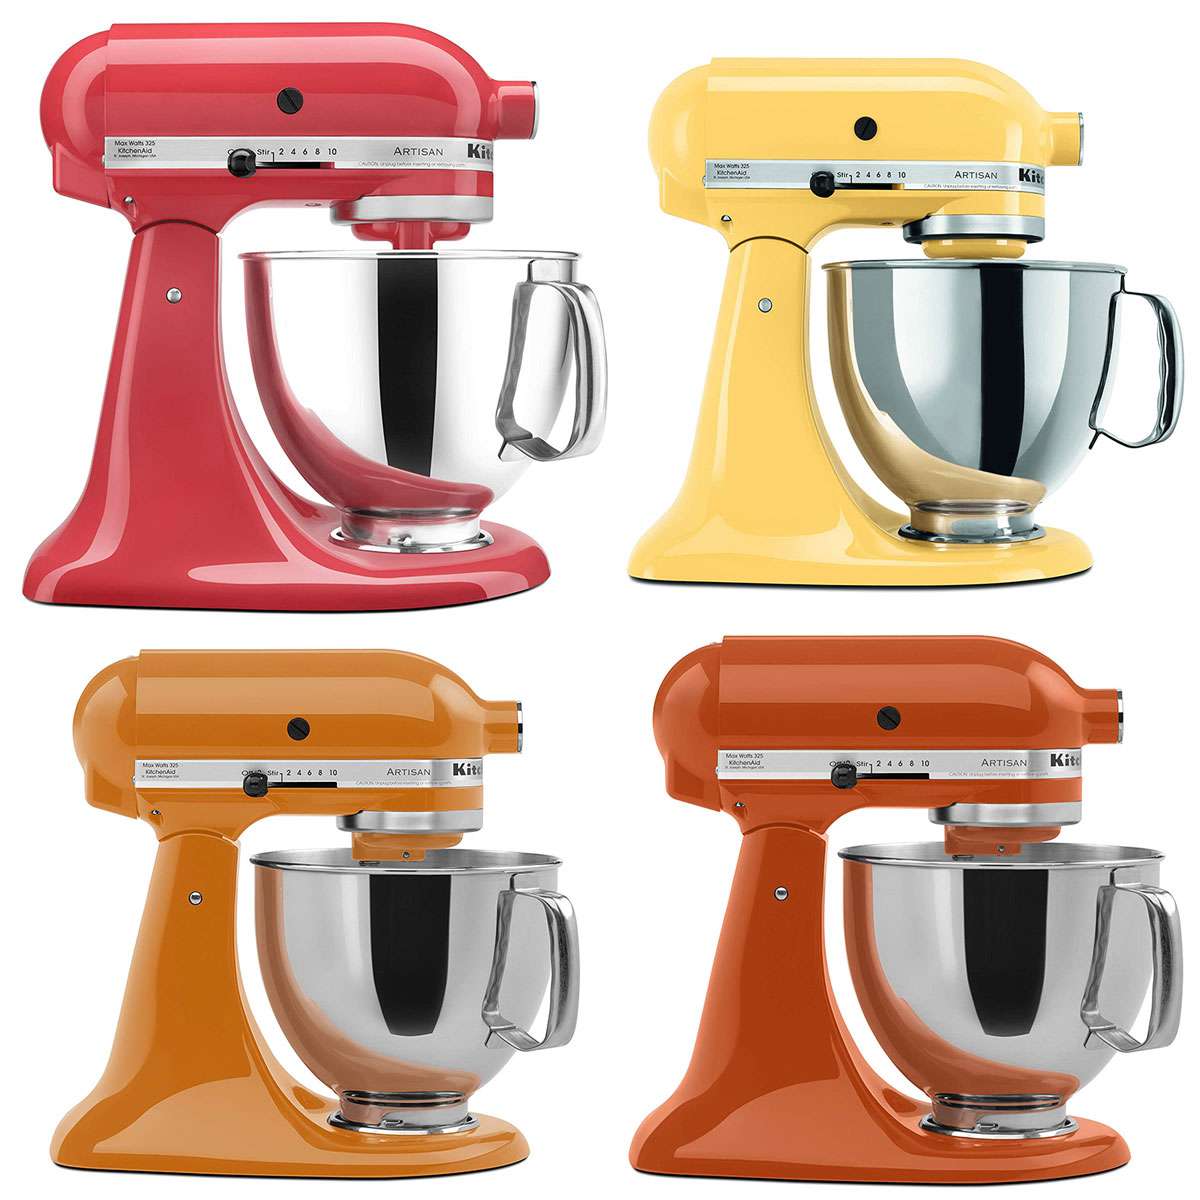 kitchenaid mixers in bright colors